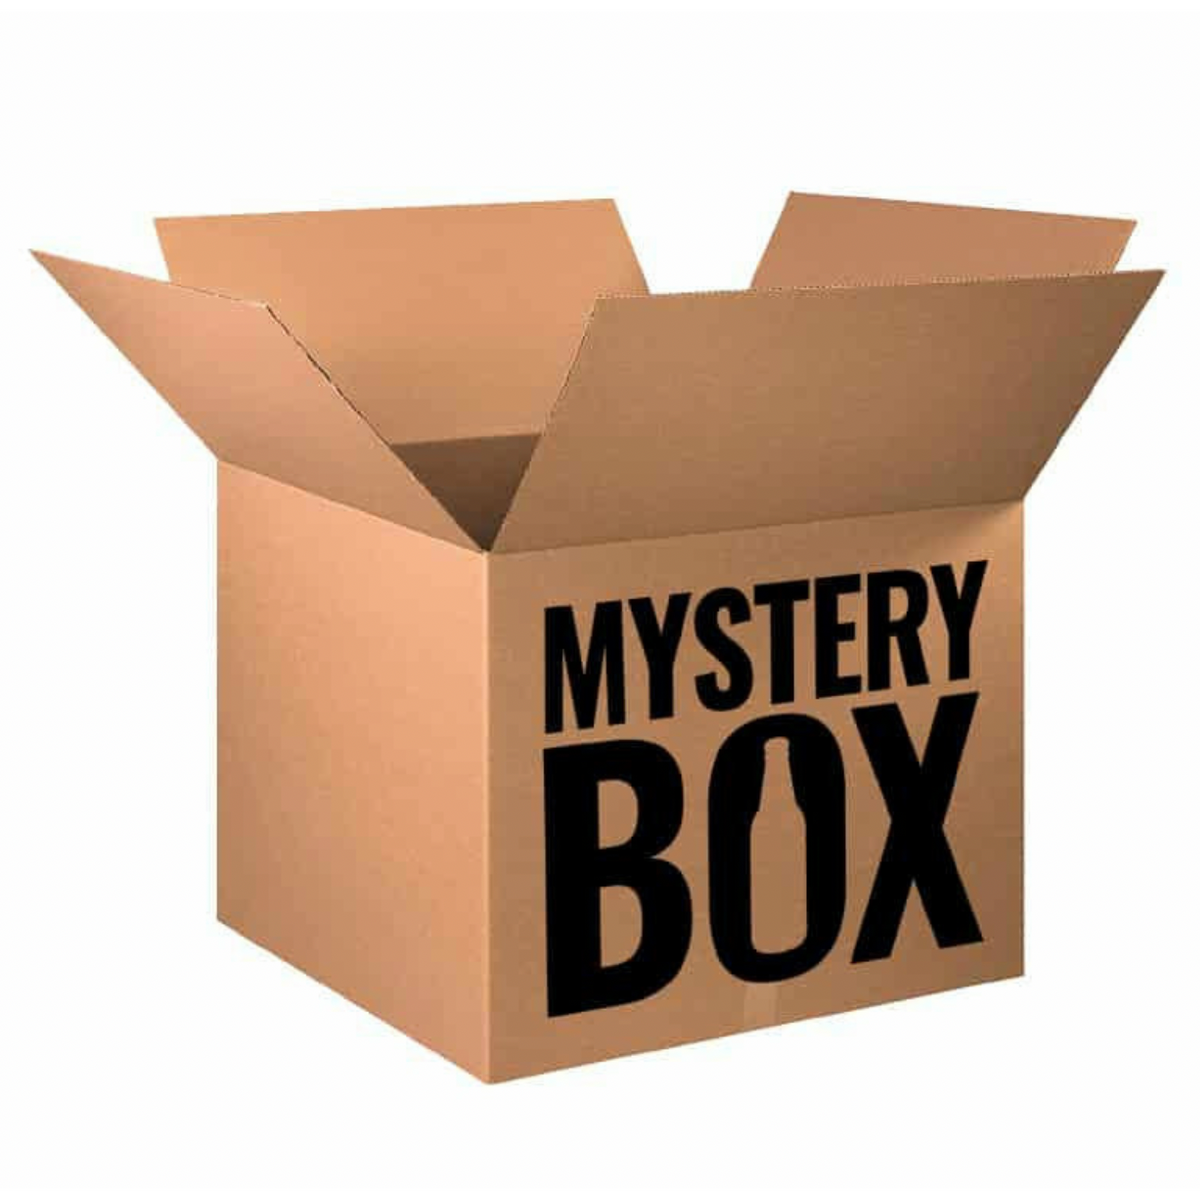 Mystery Box Mystery Box 250.00, mysterious box